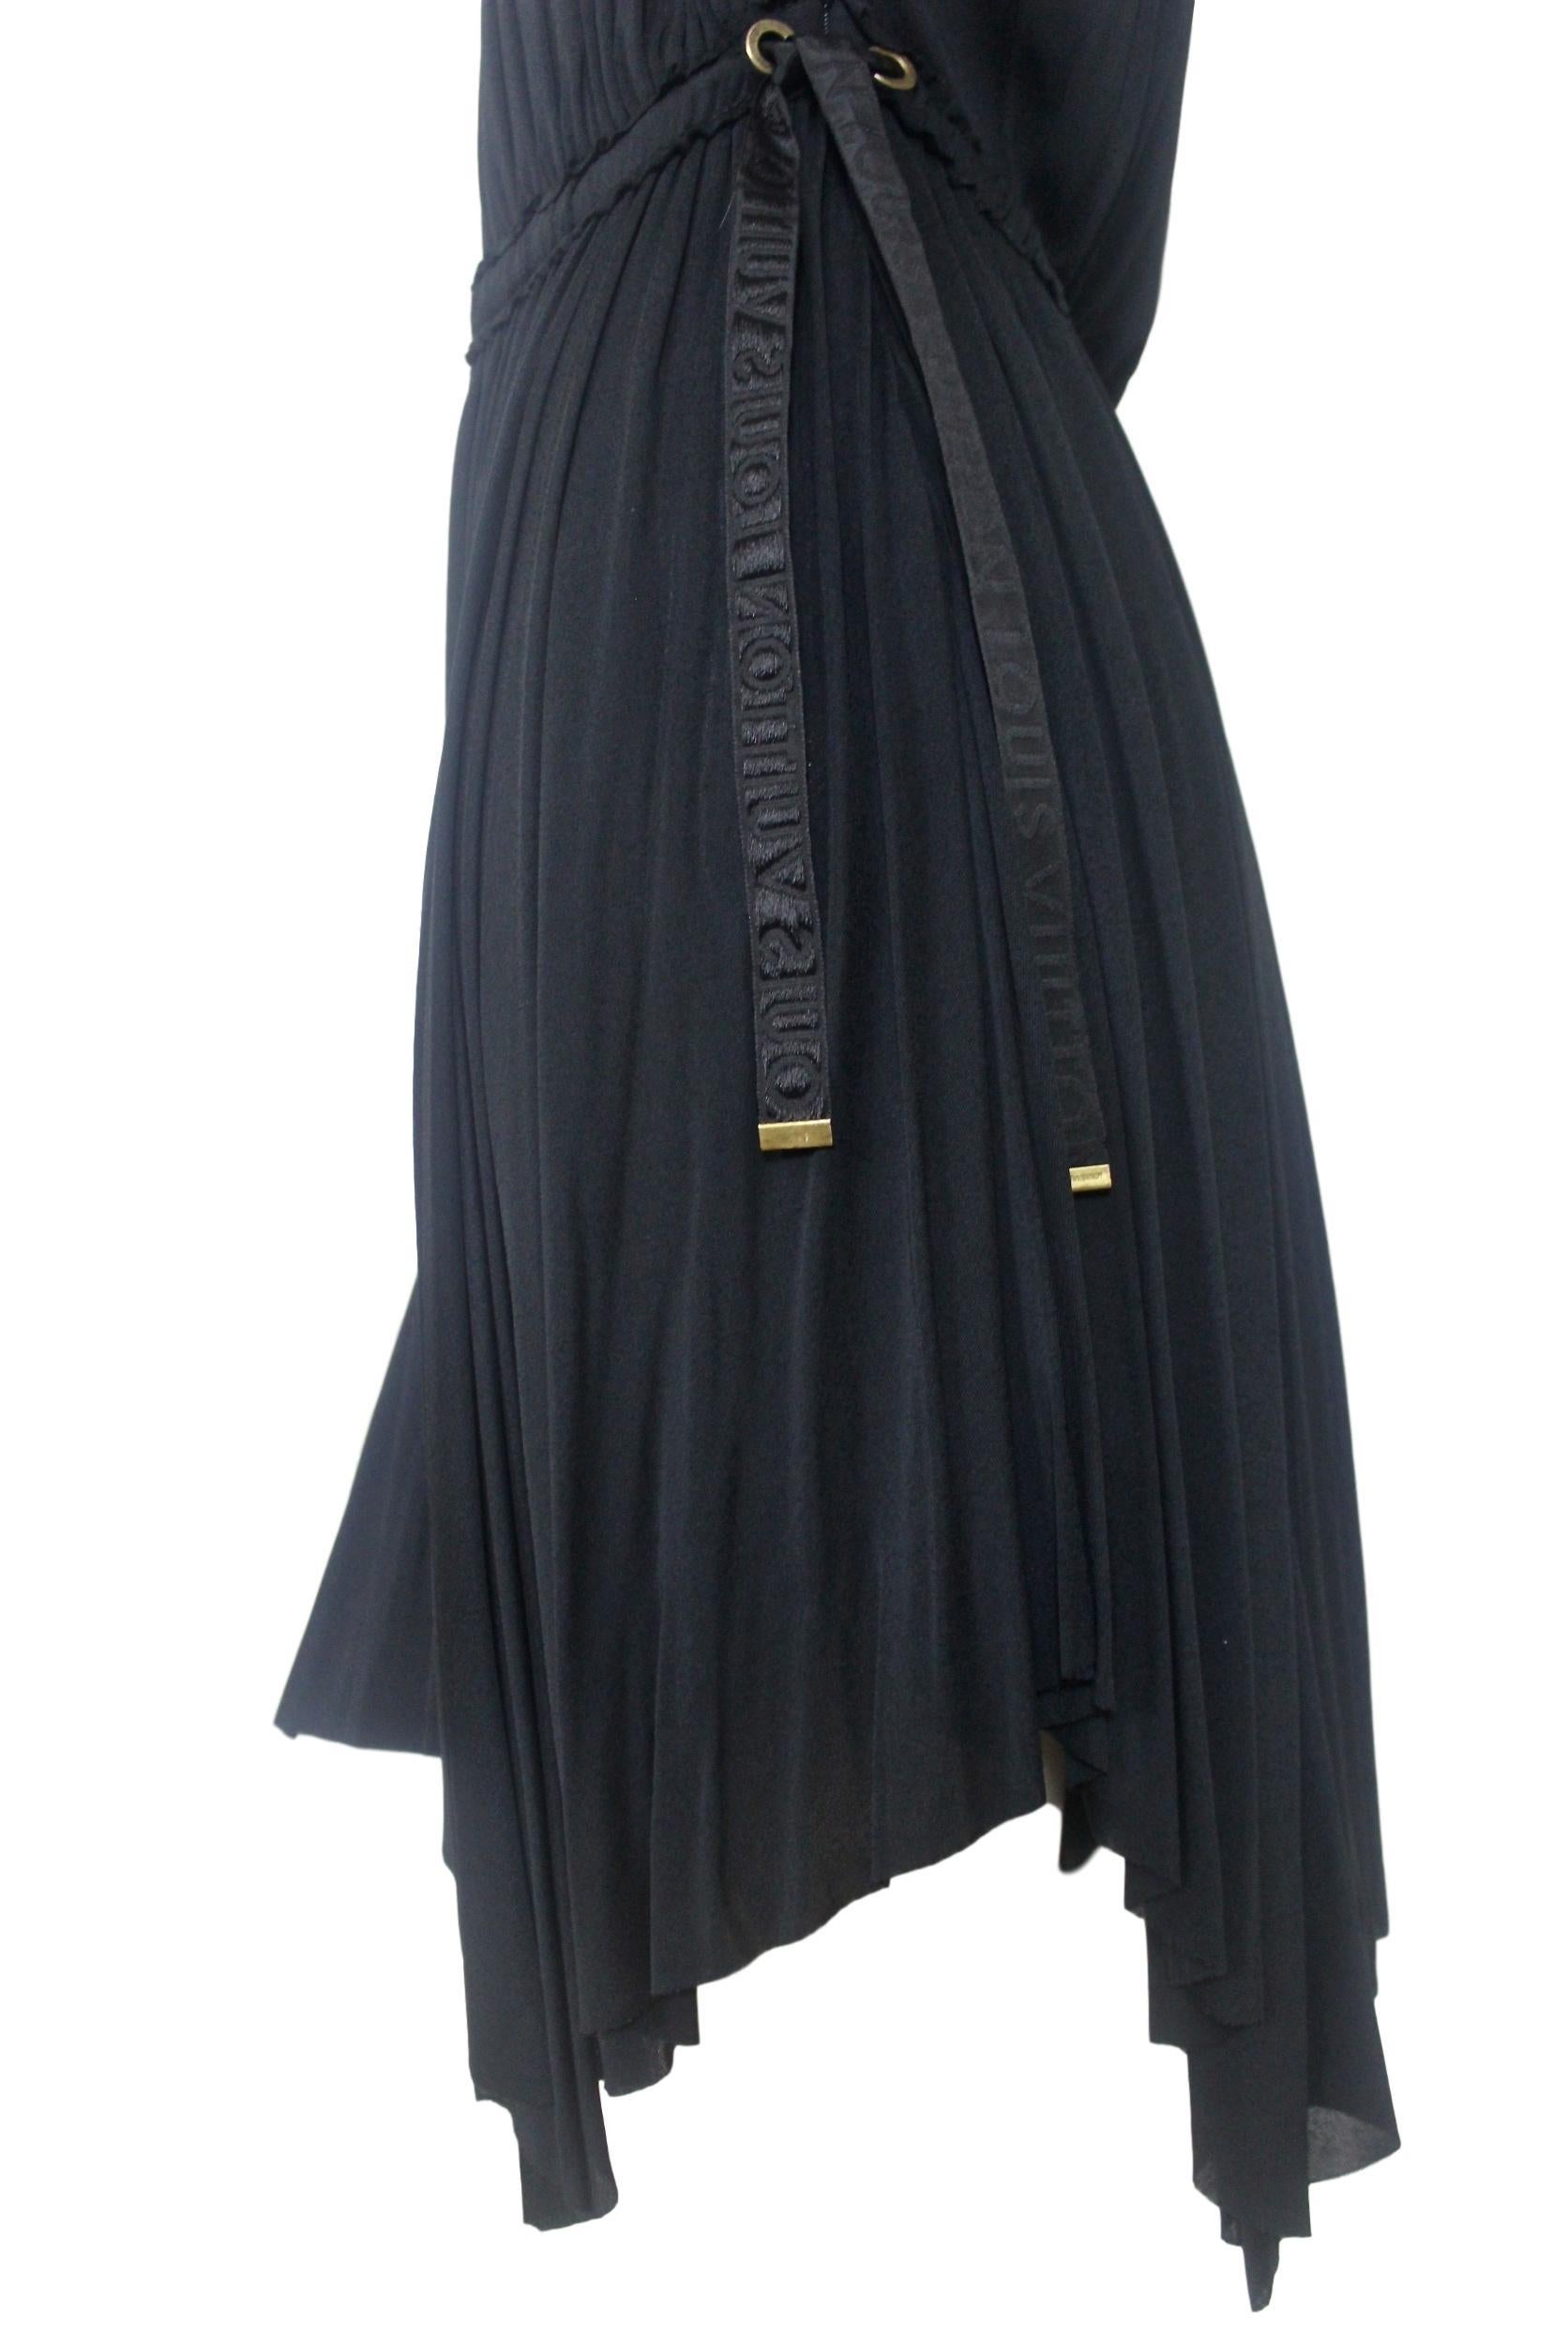 Louis Vuitton Grecian Style Dress For Sale 4